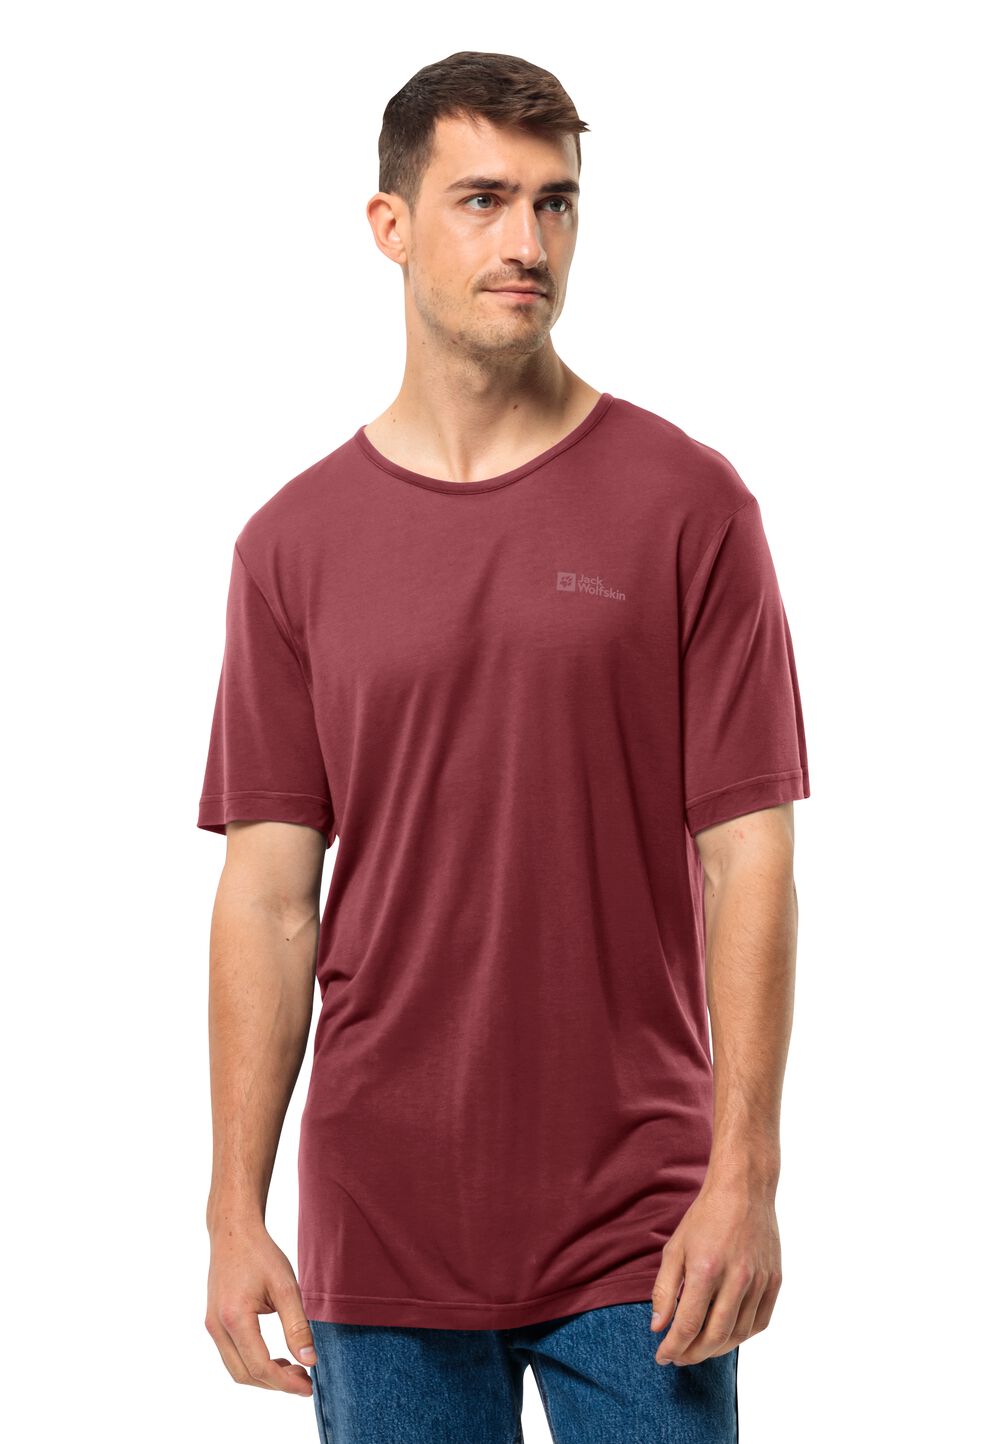 Jack Wolfskin Mola T-Shirt Men Functioneel shirt Heren L purper deep ruby